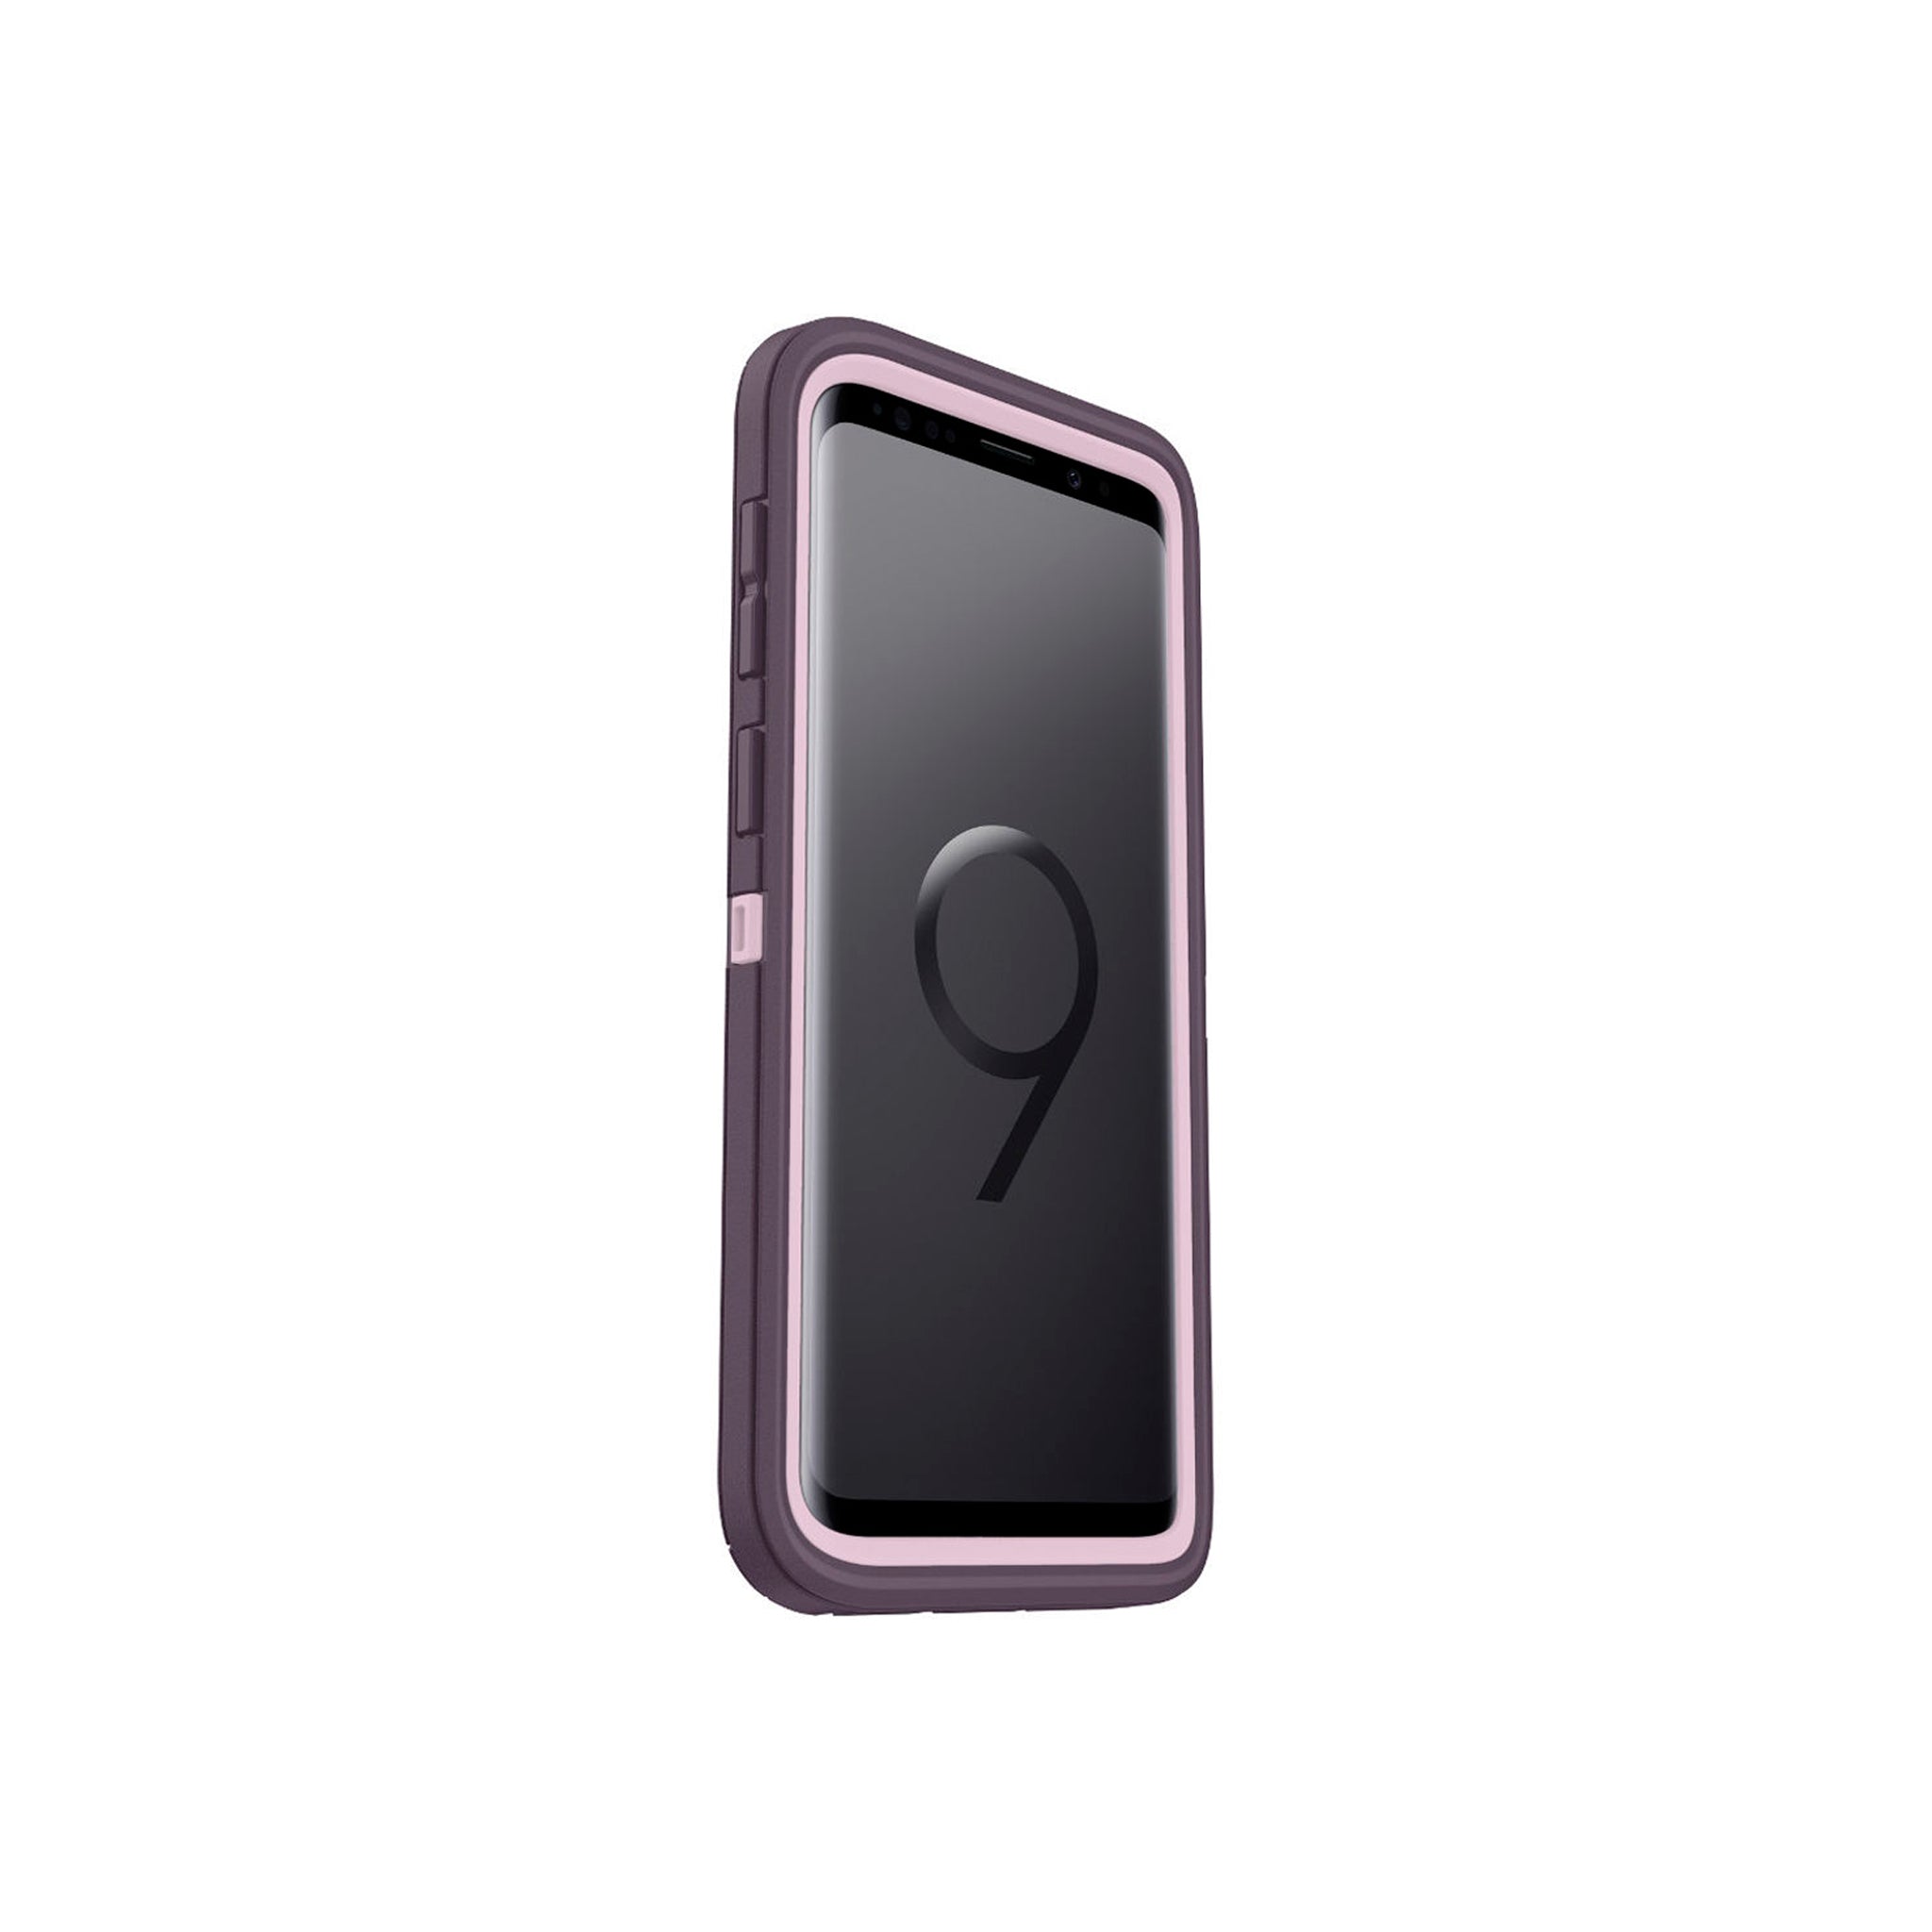 OtterBox - Defender Serie Case for Galaxy S9 - Purple